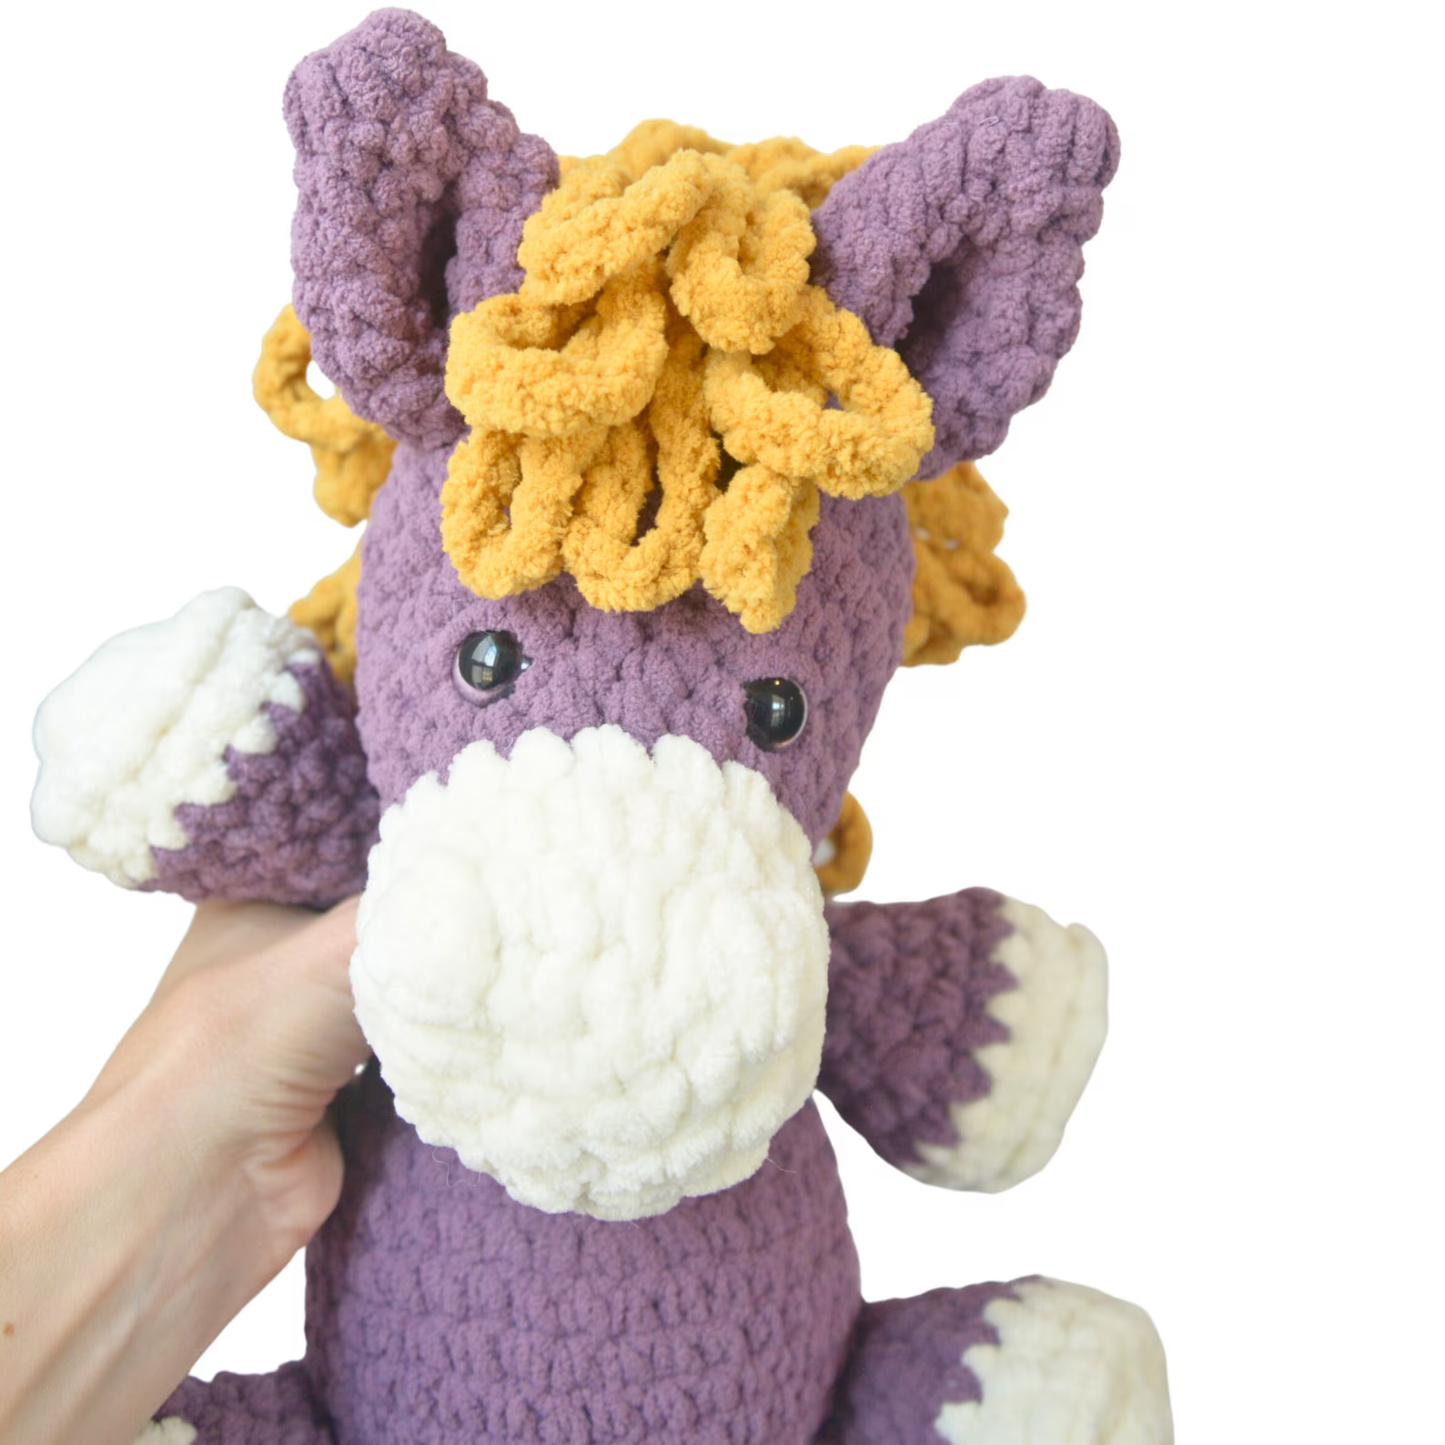 crochet horse plushie